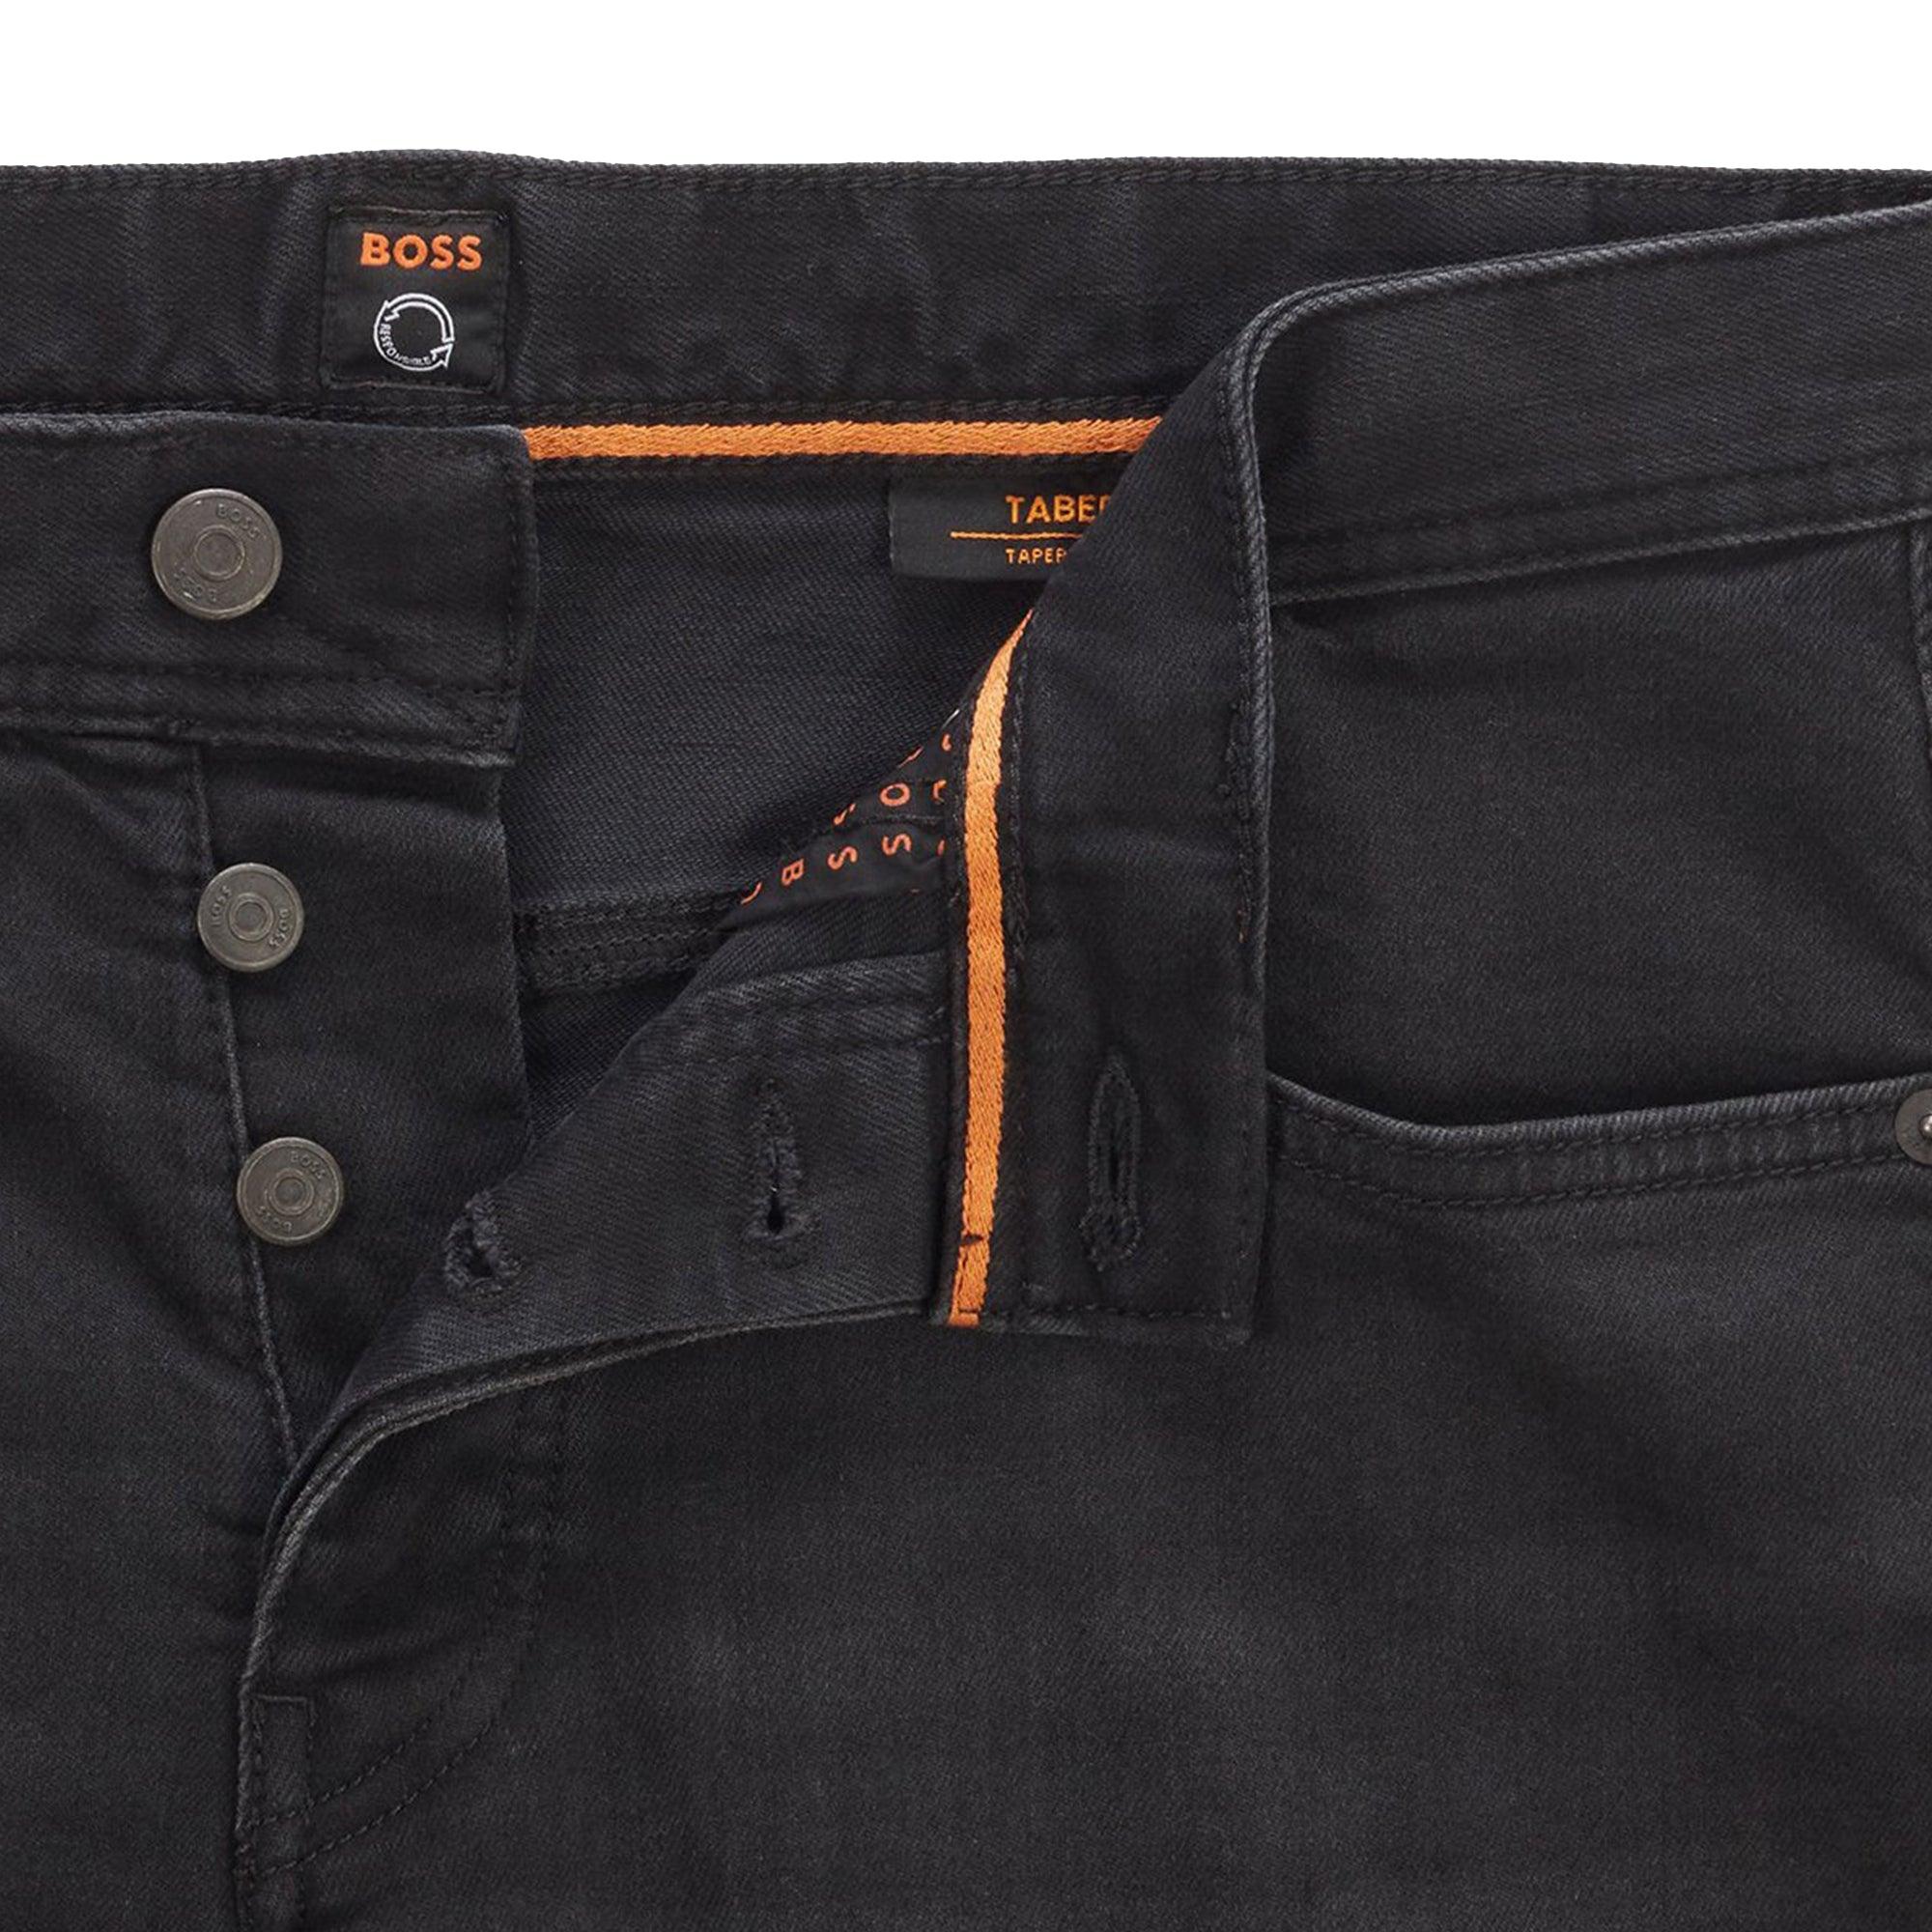 BOSS by HUGO BOSS Delaware Slim Fit Jeans - Black Stretch for Men | Lyst